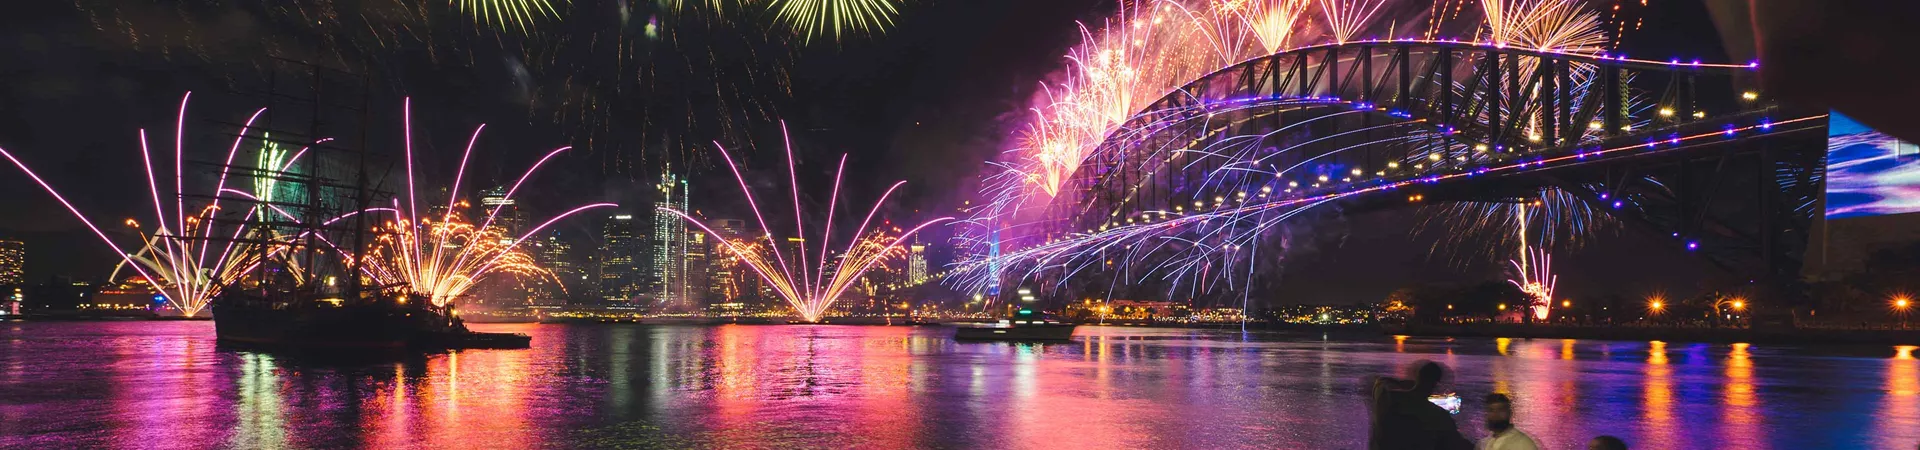 Fireworks Night Time Sydney